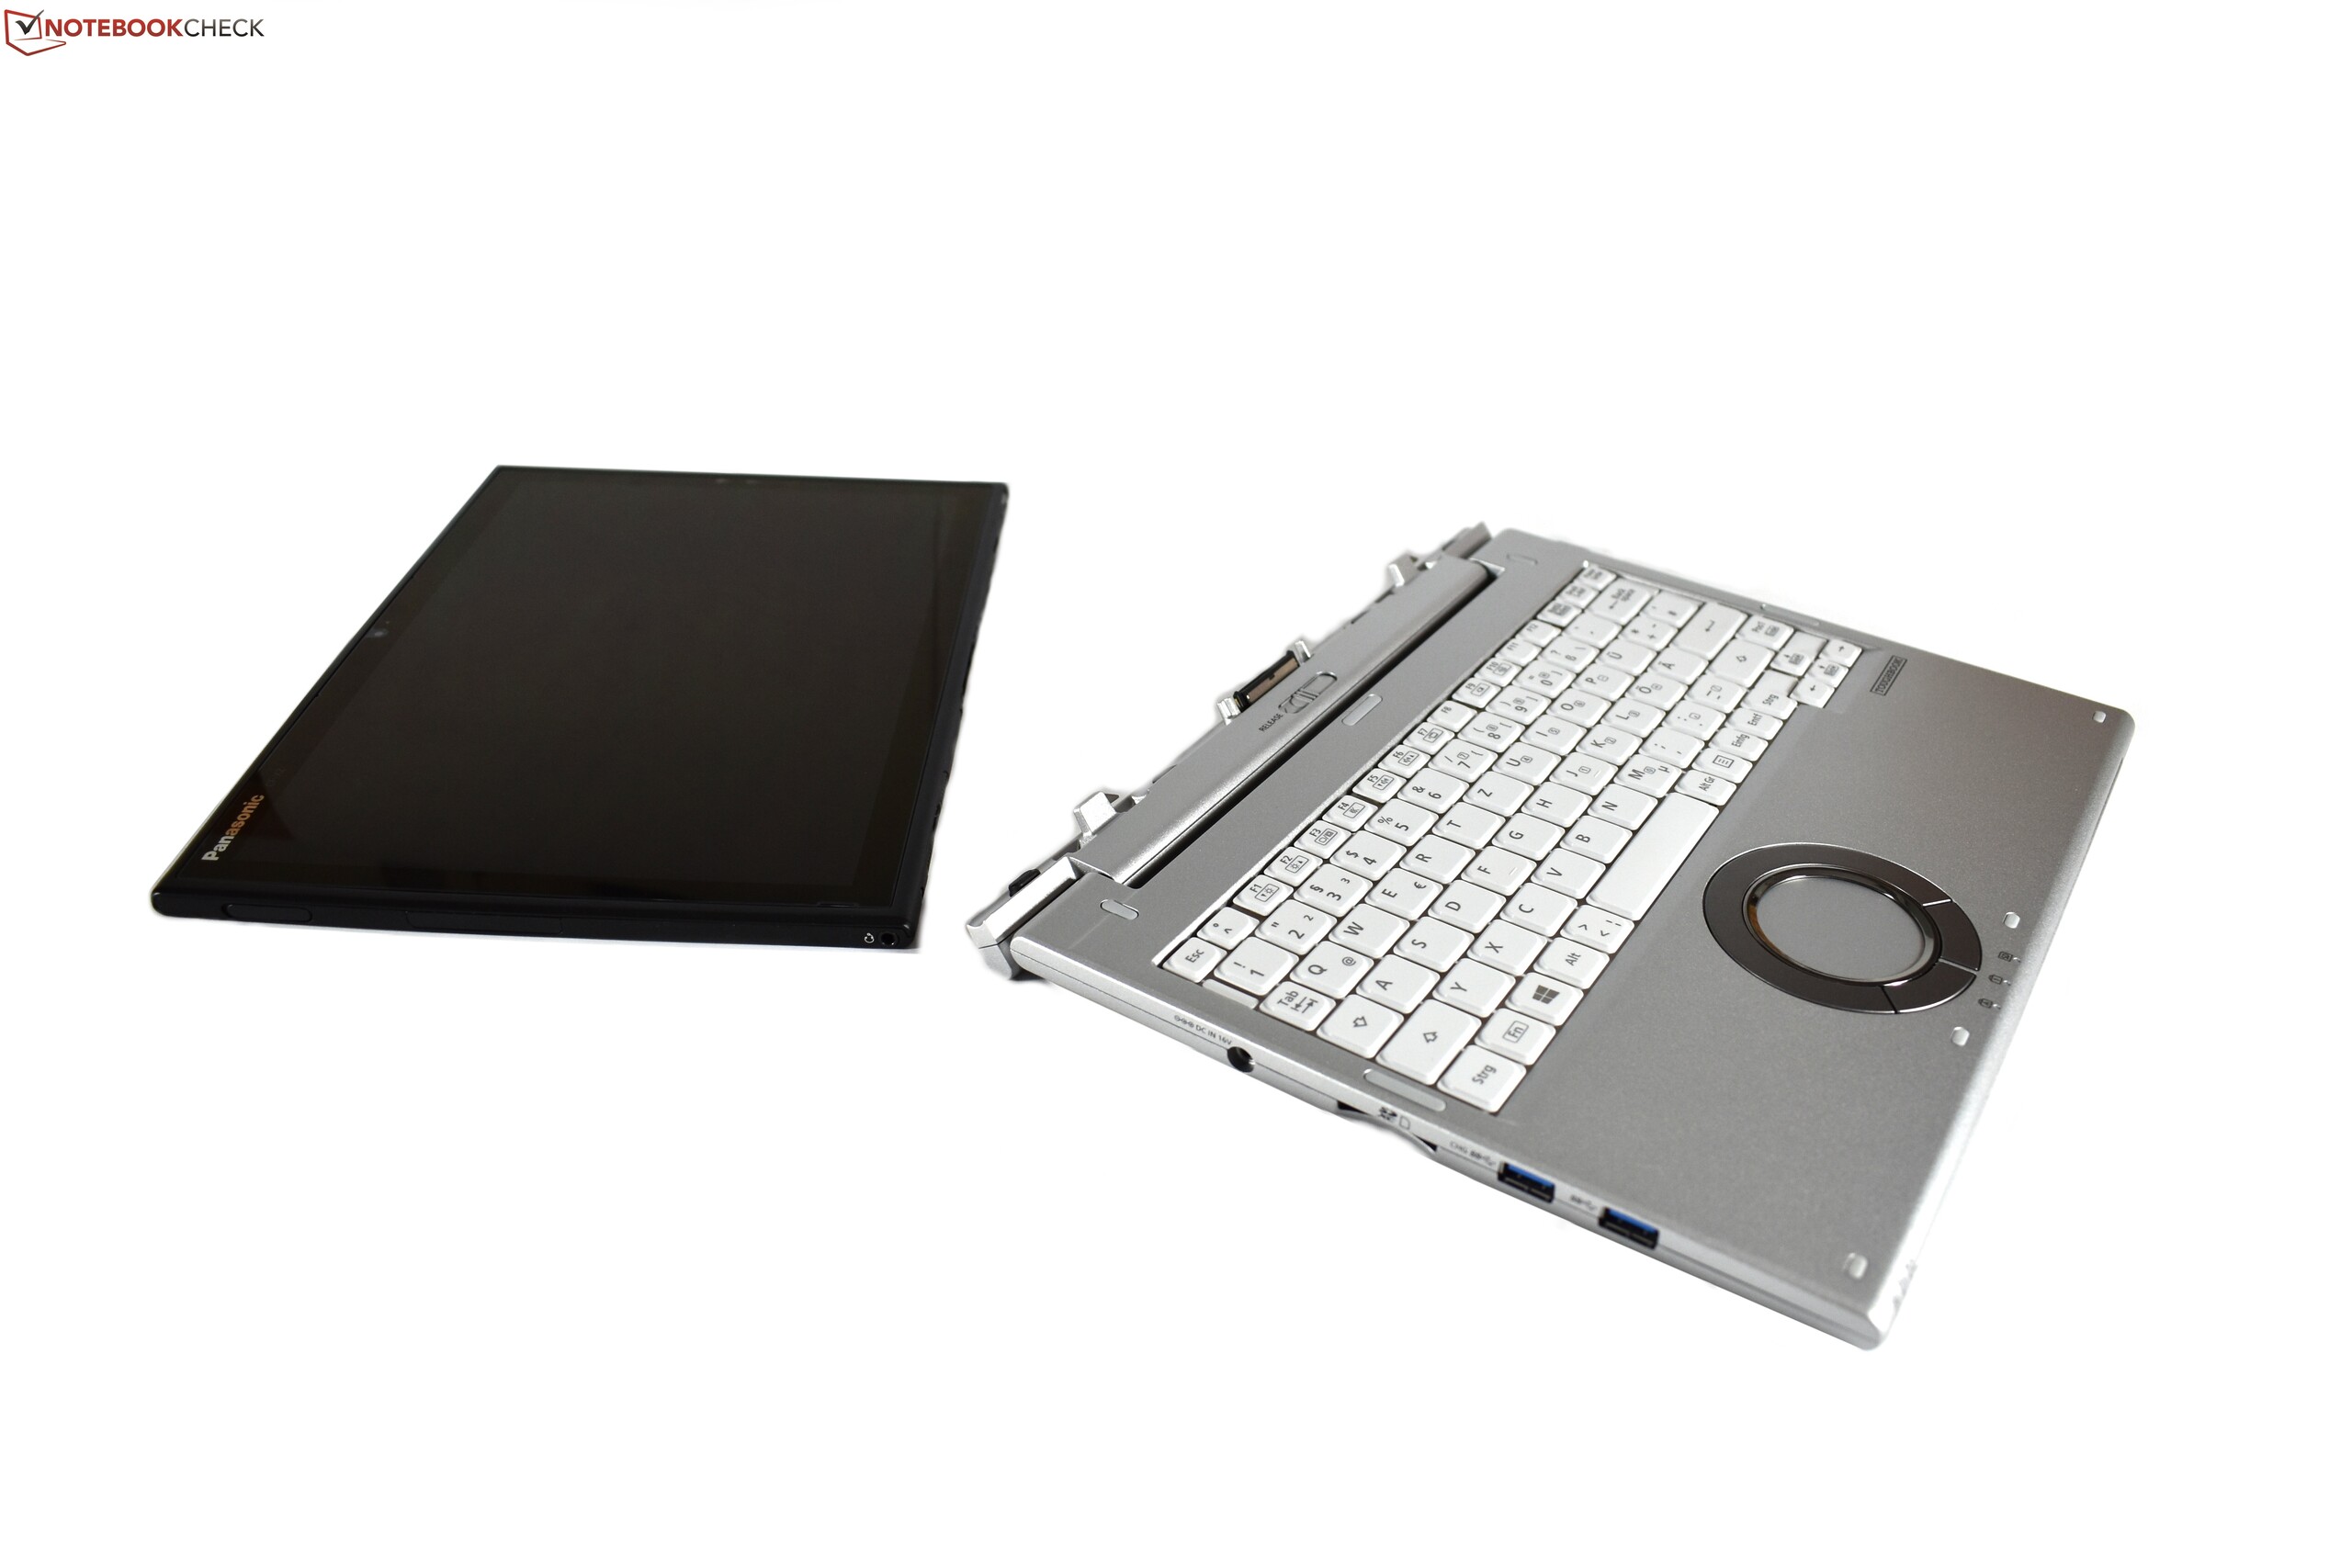 Panasonic Toughbook CF-XZ6 Convertible Review - NotebookCheck.net 